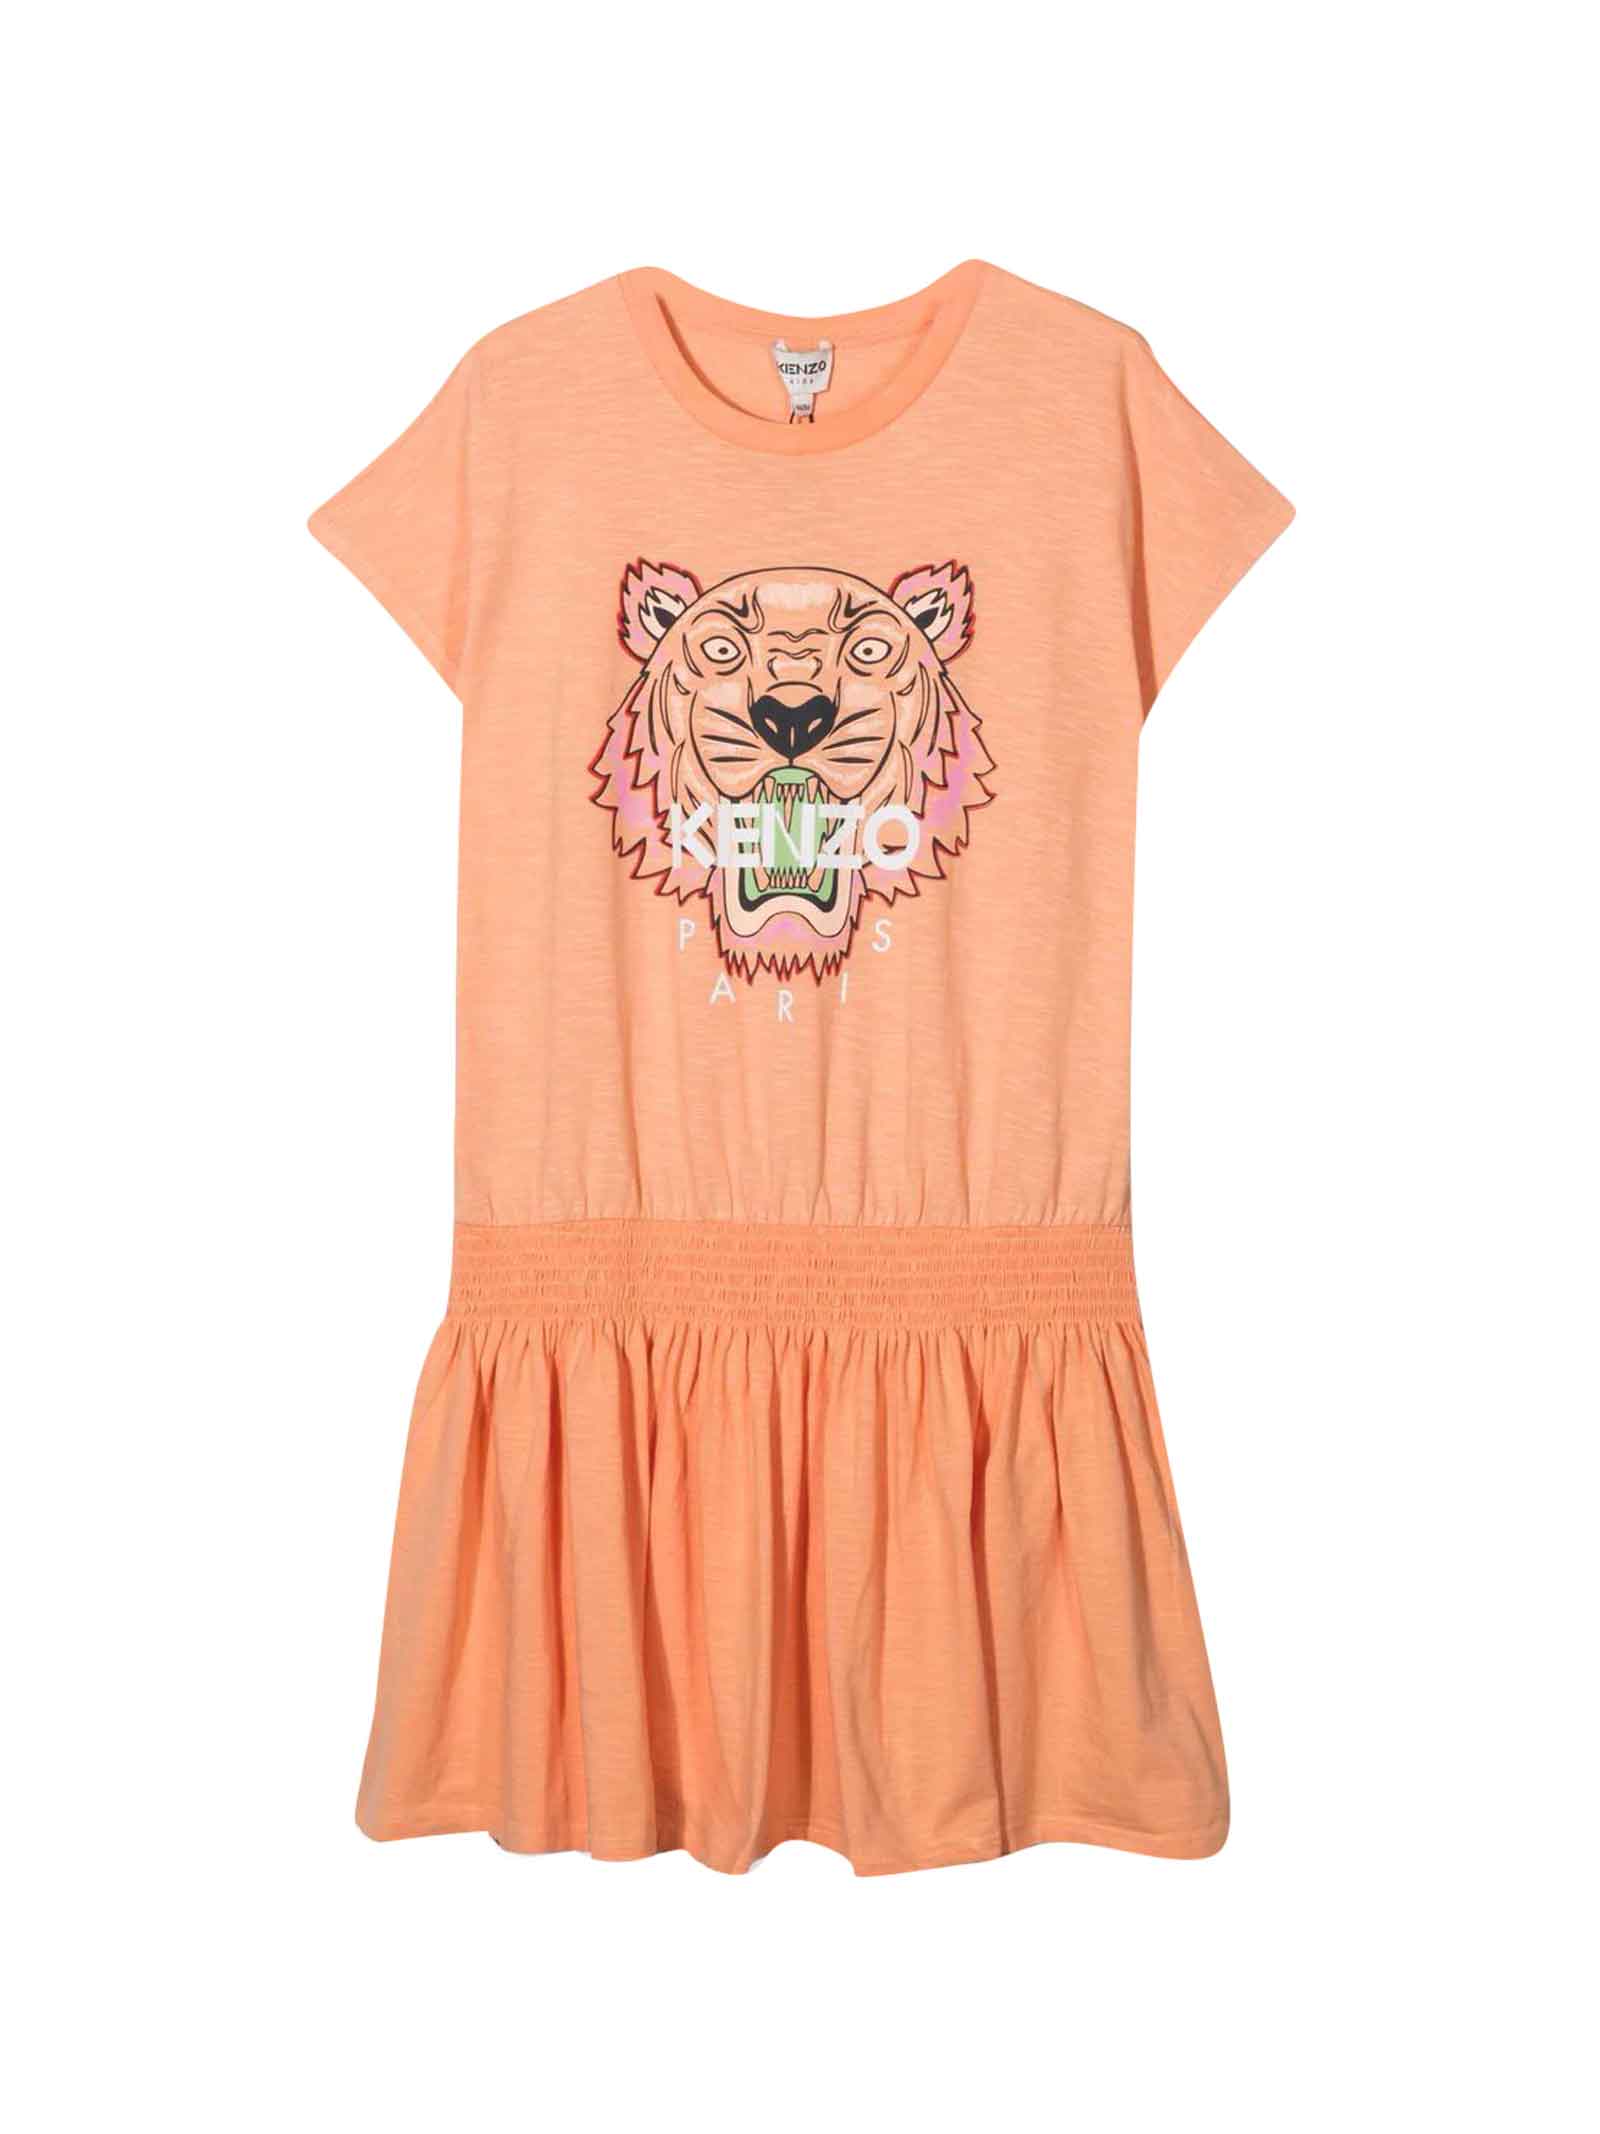 Kenzo Kids Orange Dress Teen Girl